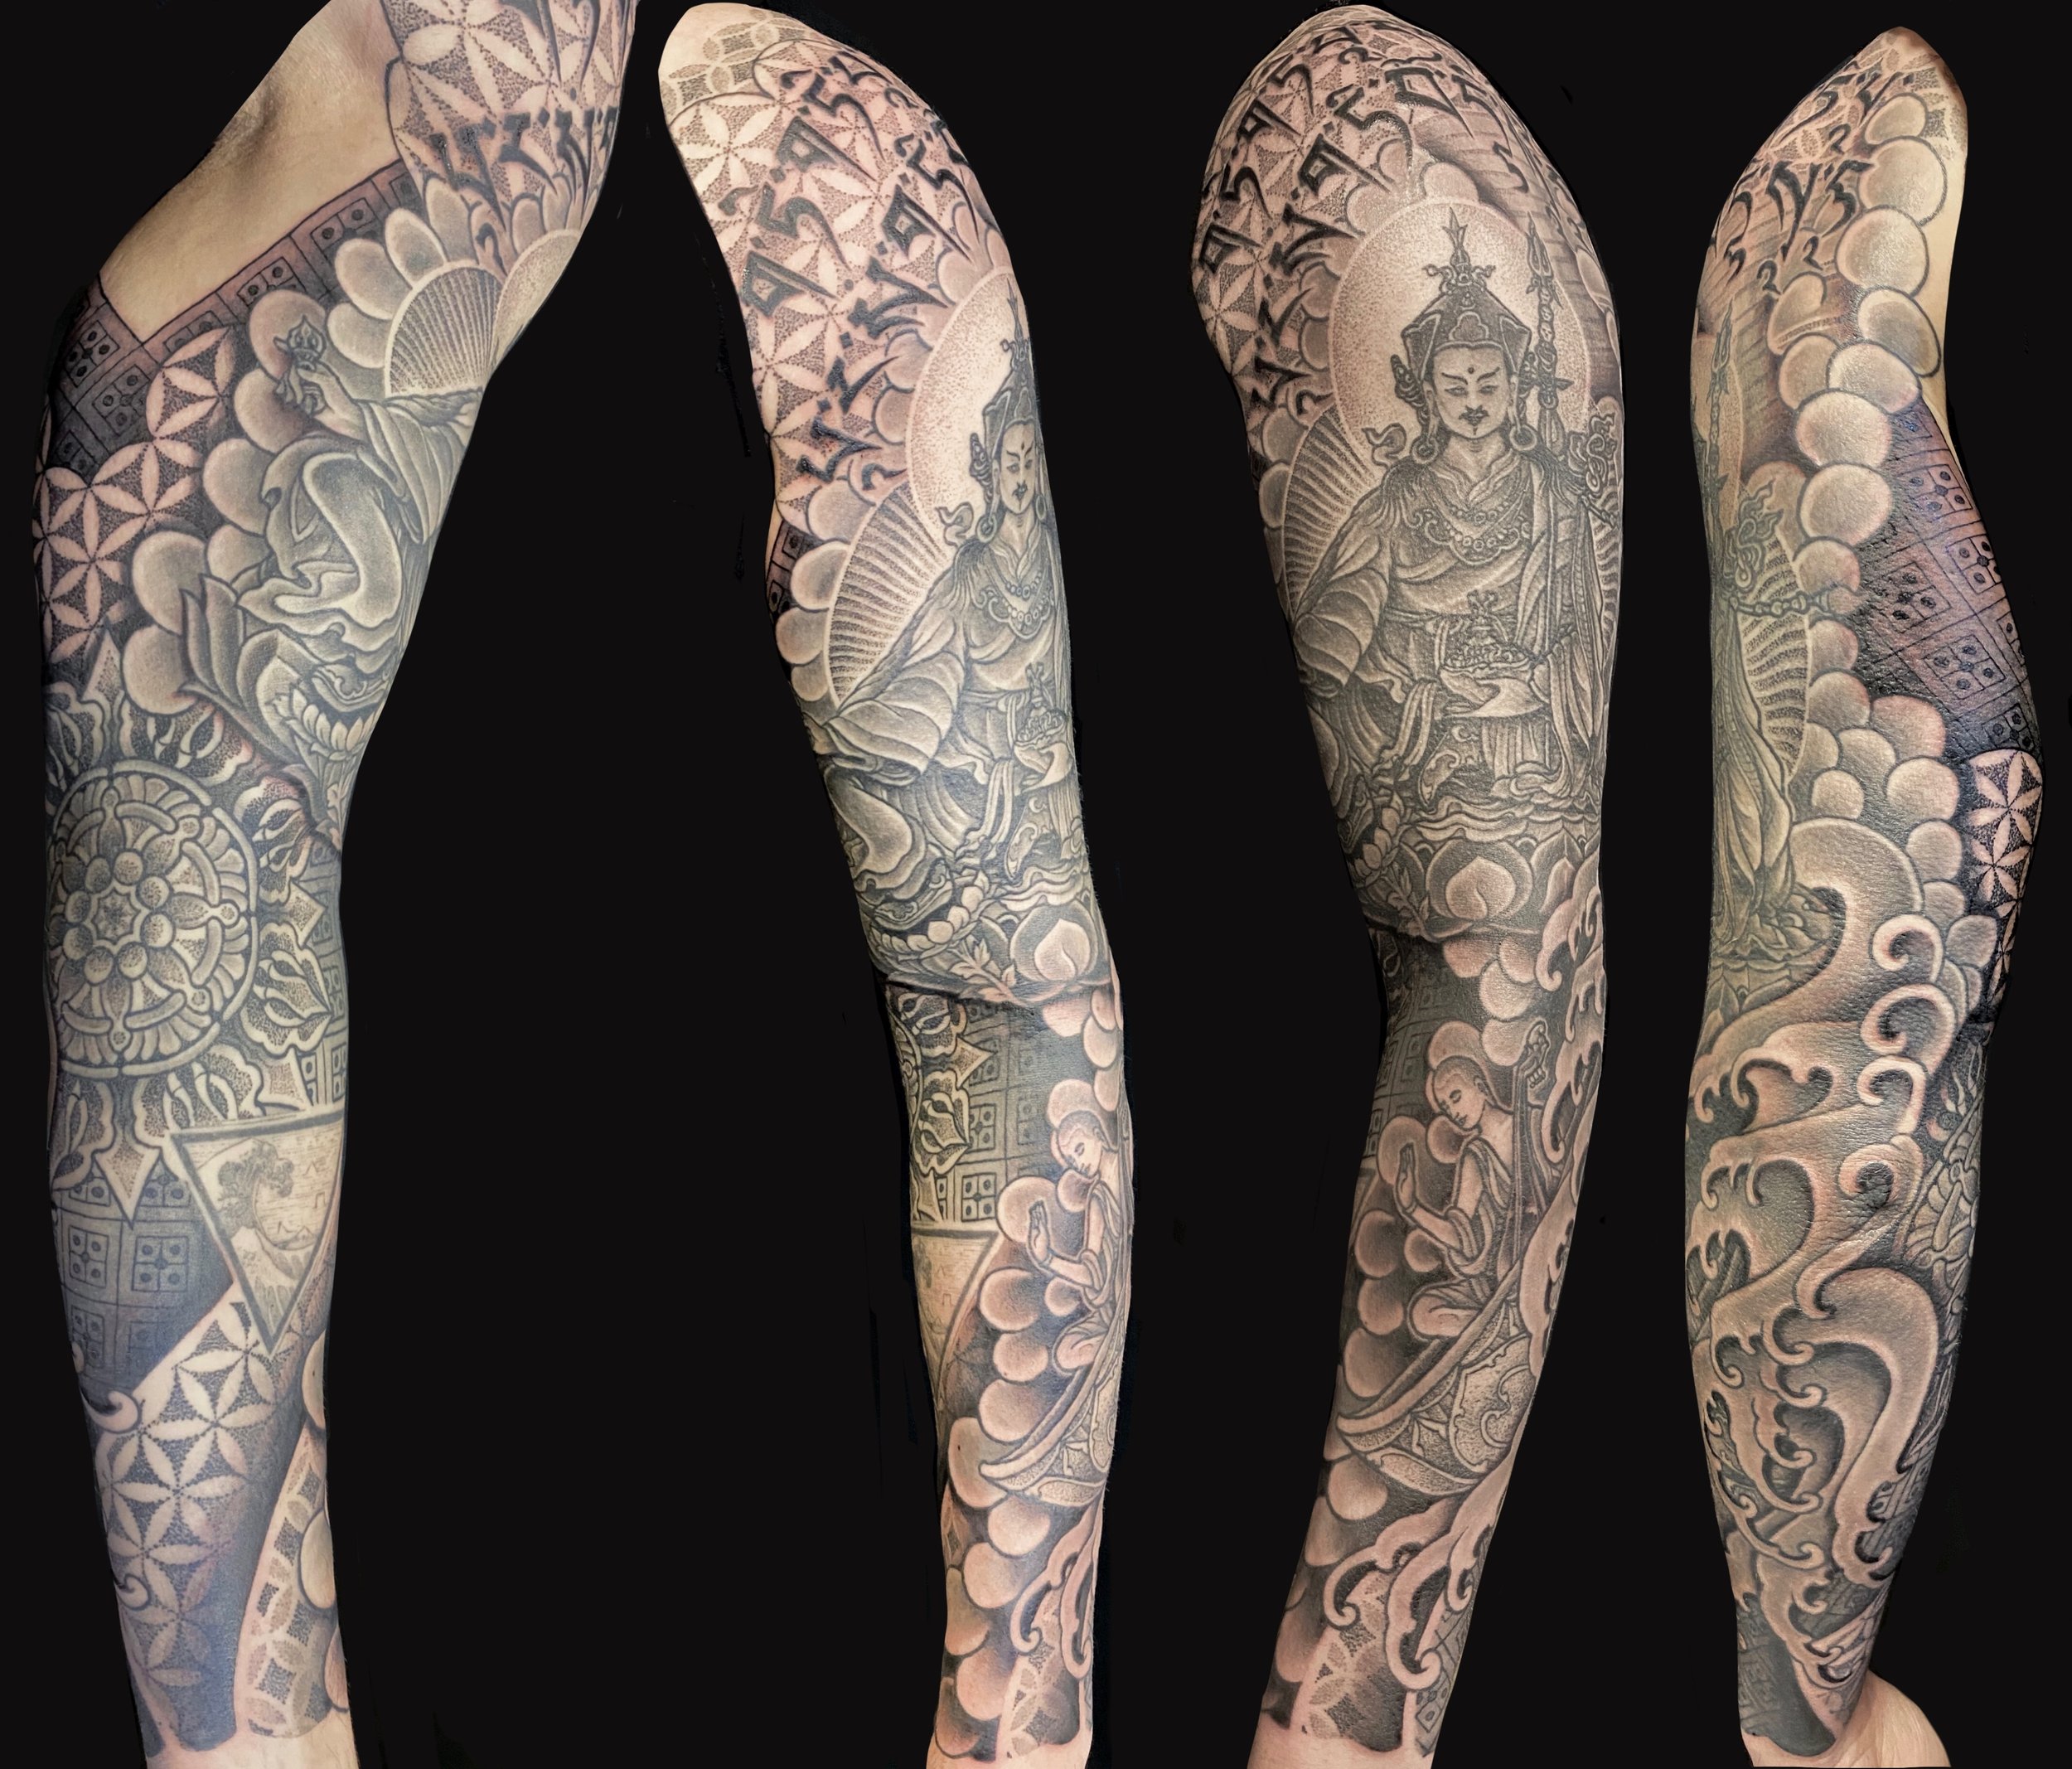 Victoria, BC Tattoo Shop - Tattoo Artist - Cohen Floch - Large Custom  Tattoos - Vancouver Island — Tattoo Artist - Victoria, BC - Cohen Floch